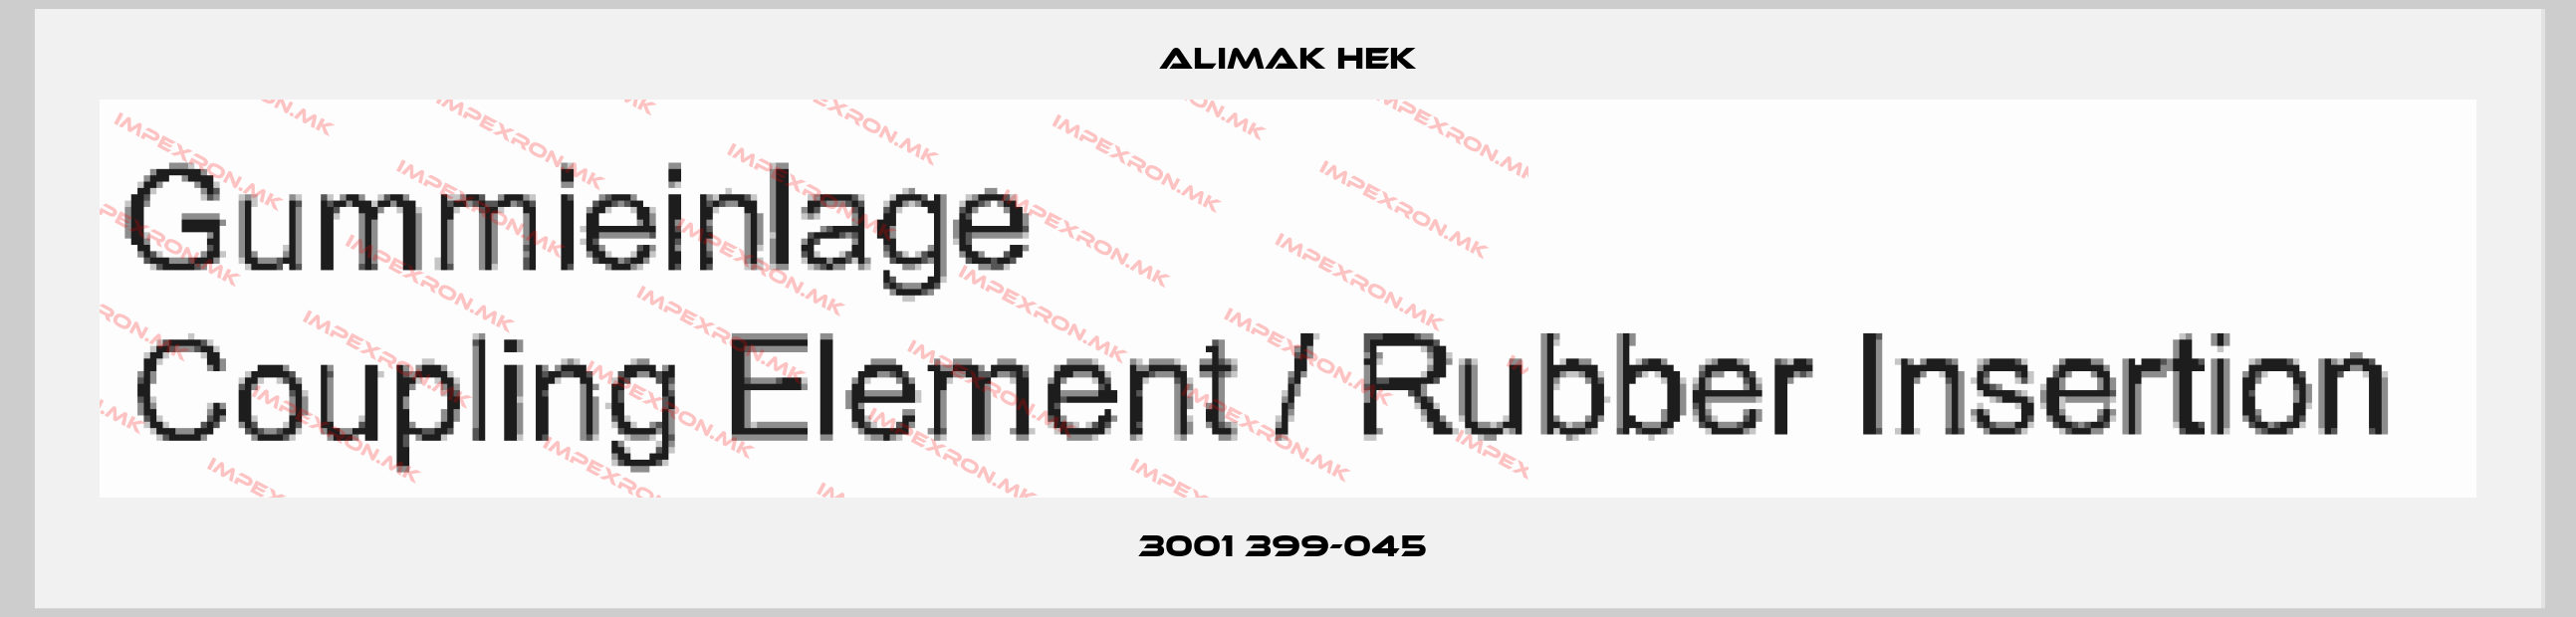 Alimak Hek-3001 399-045 price